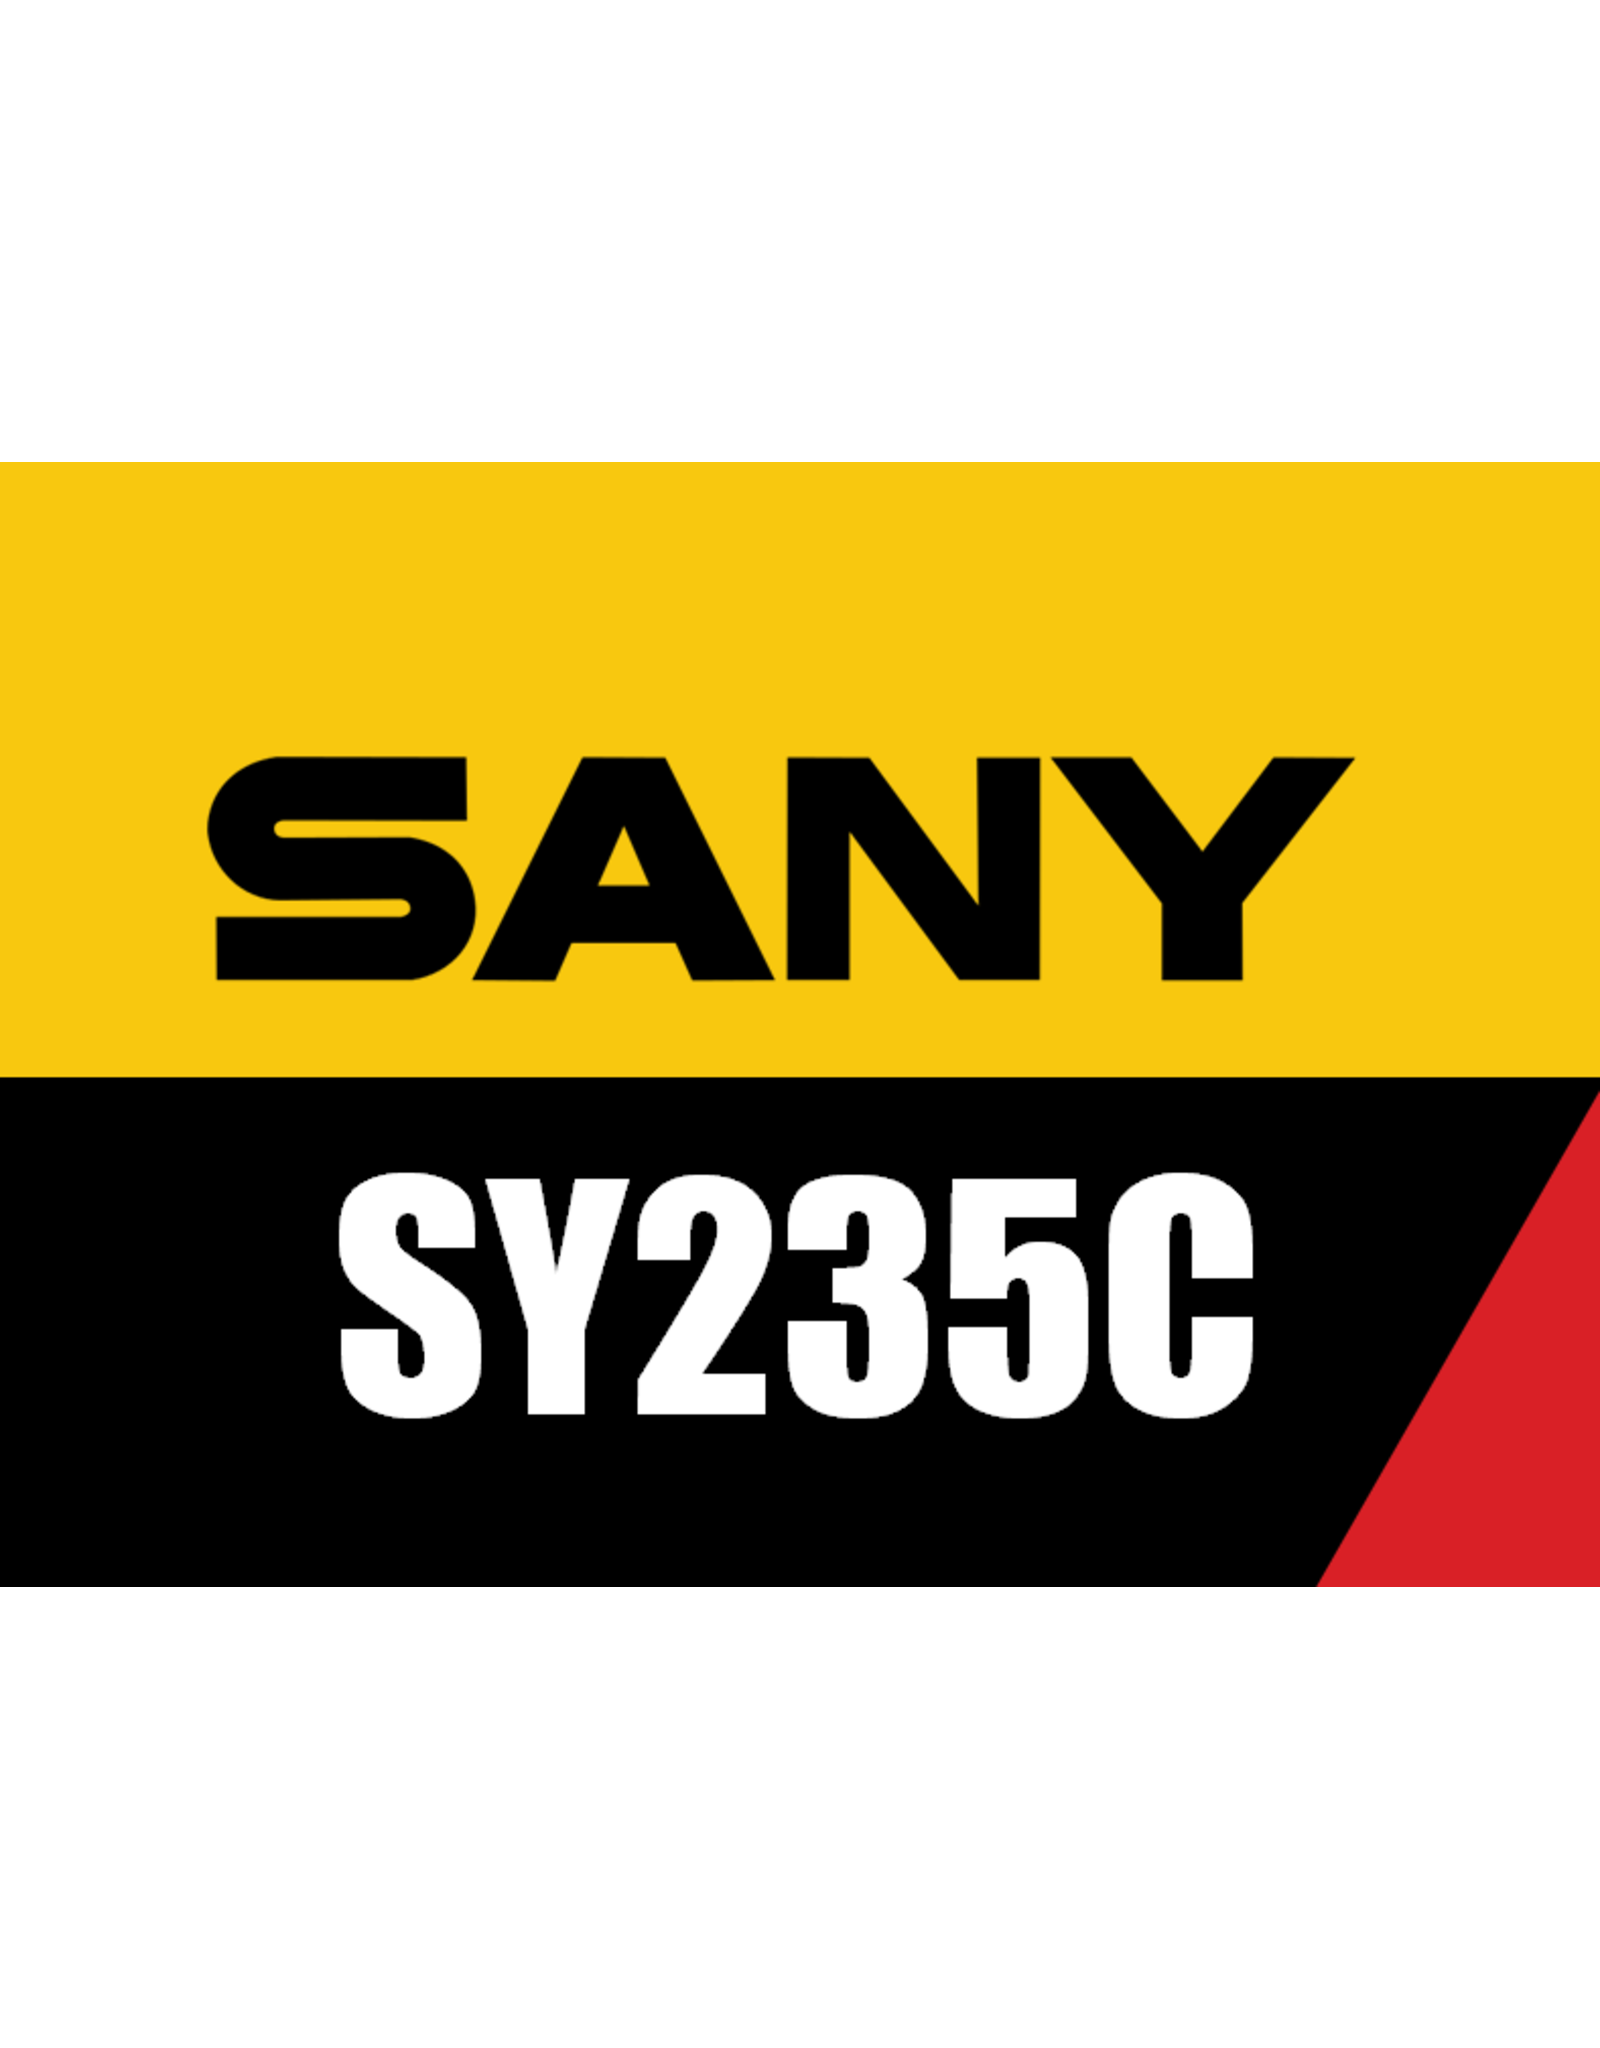 Echle Hartstahl GmbH FOPS for Sany SY235C